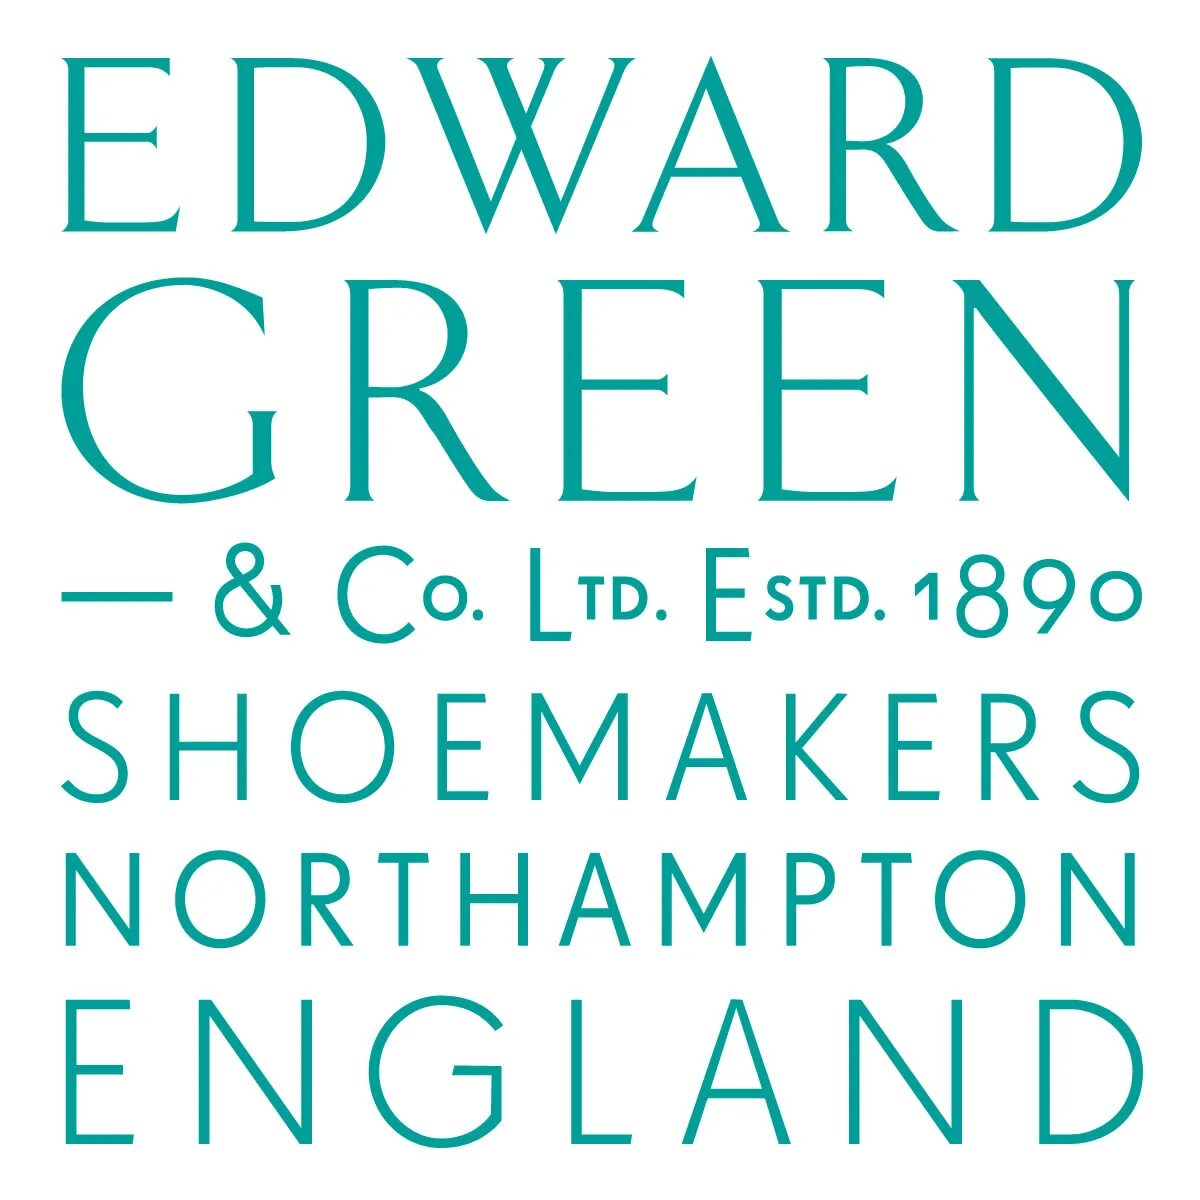 Edward Green. Edward logo. Информация о бренде Edward Green лого. Эдварде грине